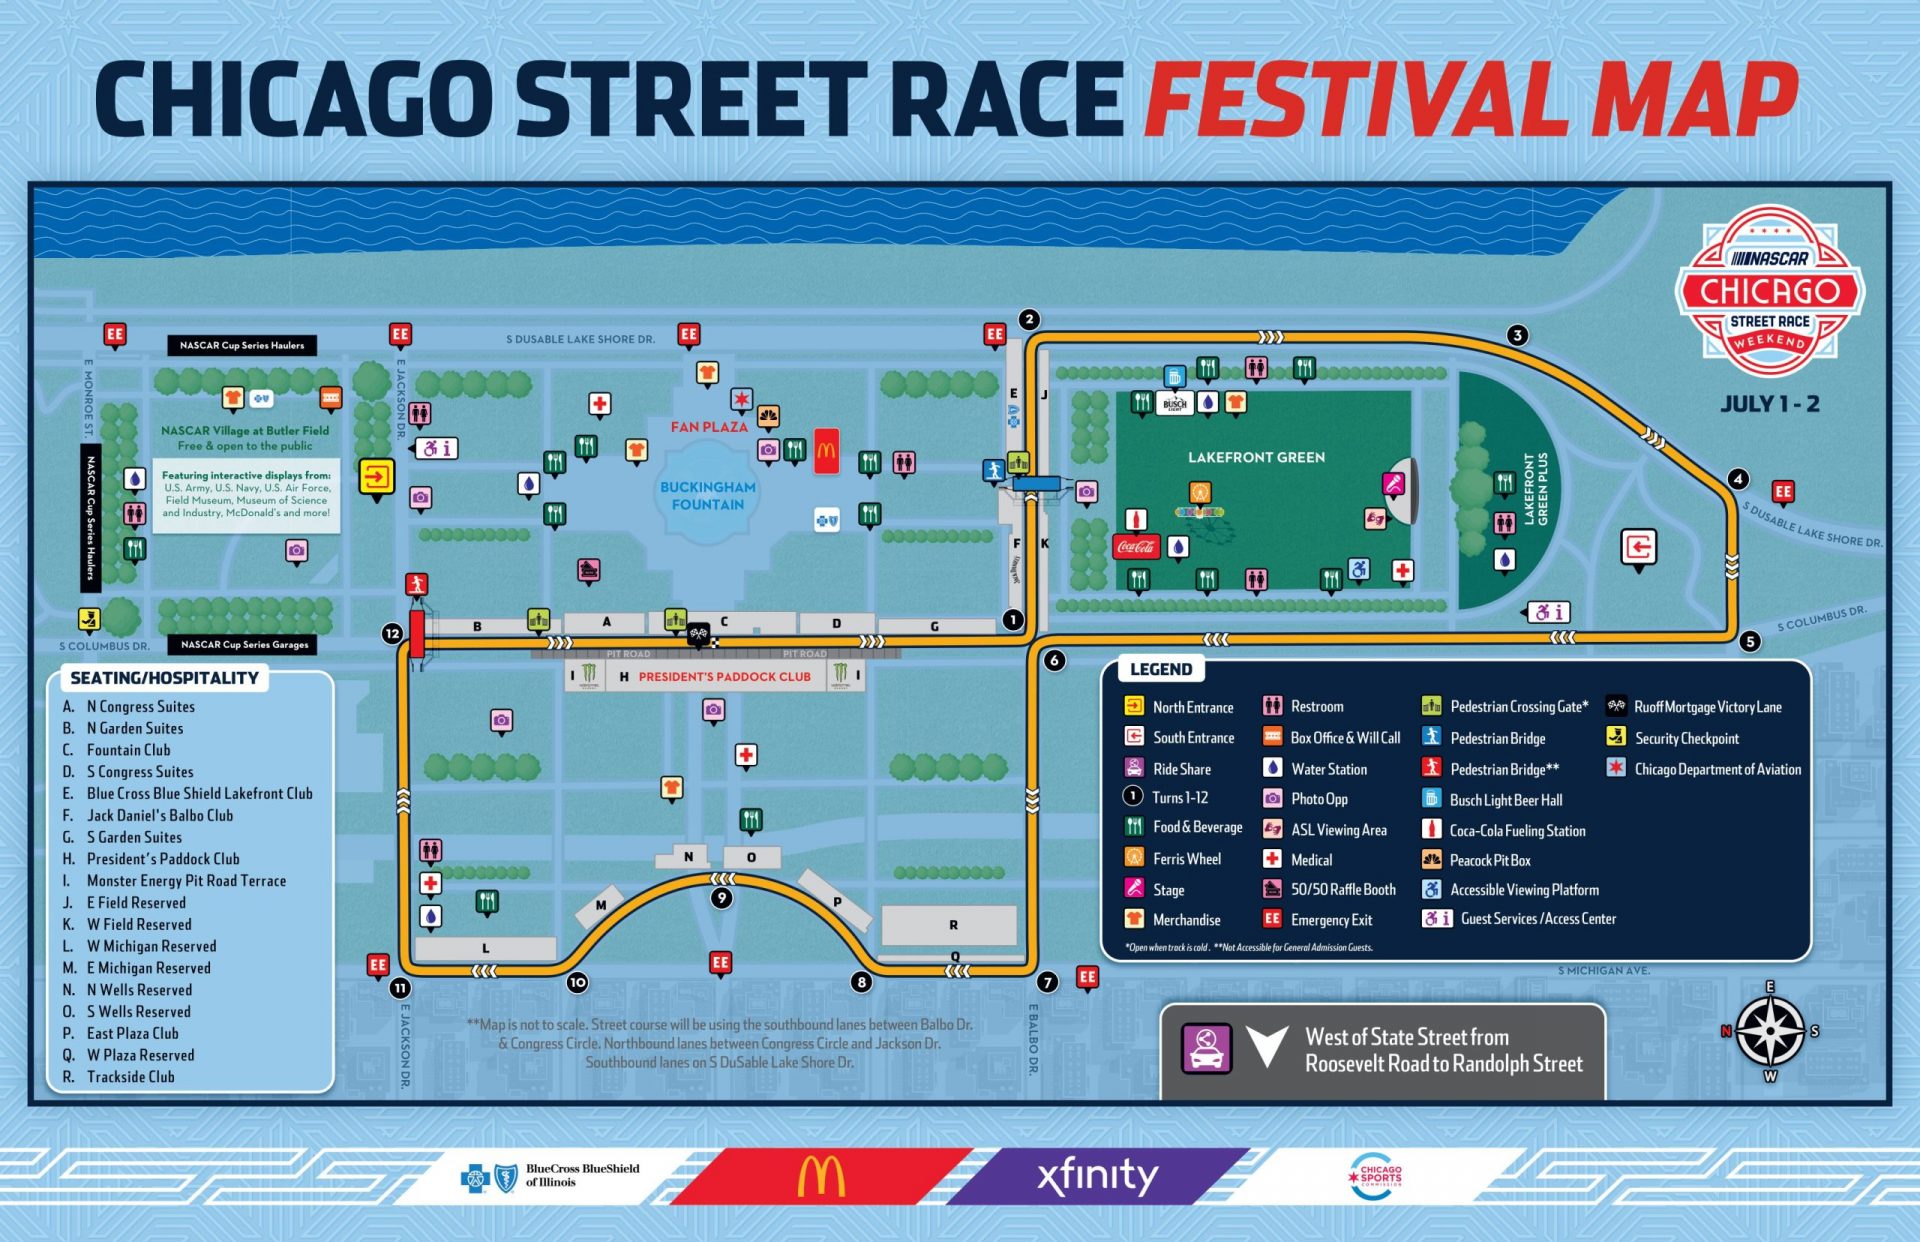 NASCAR Chicago Street Race Weekend Schedule, Race Start Times, Viewing